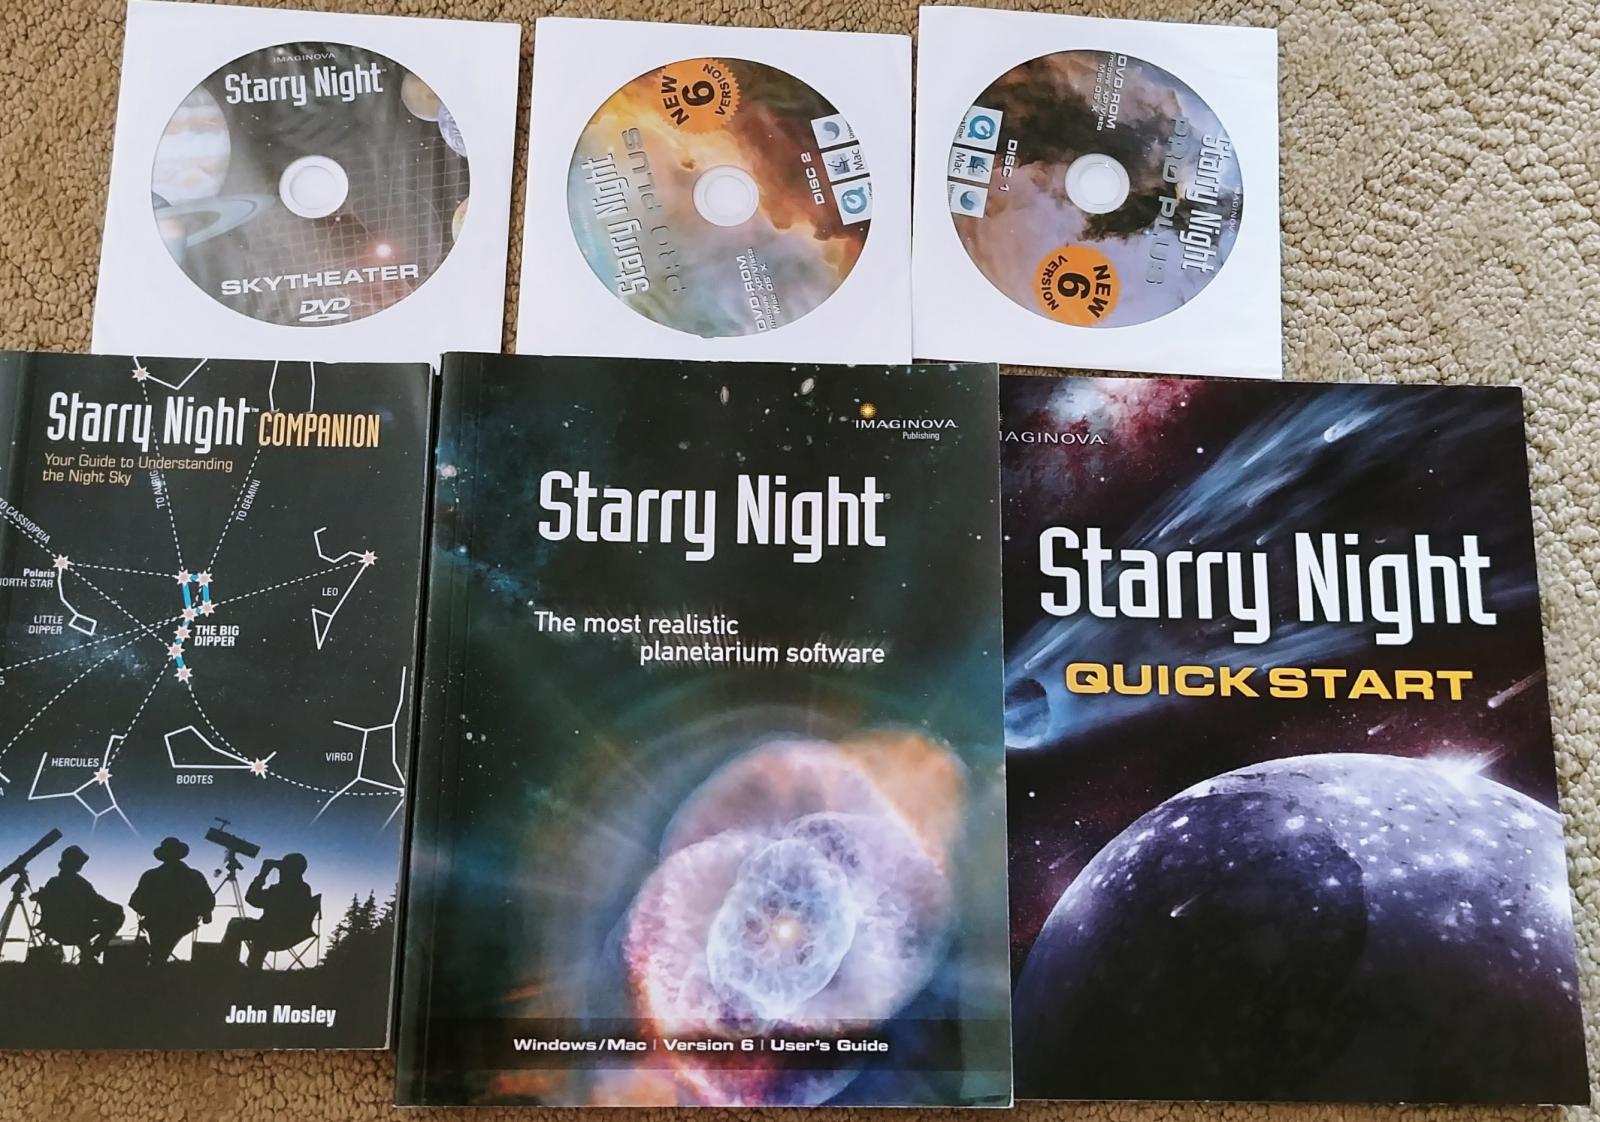 starry night pro software